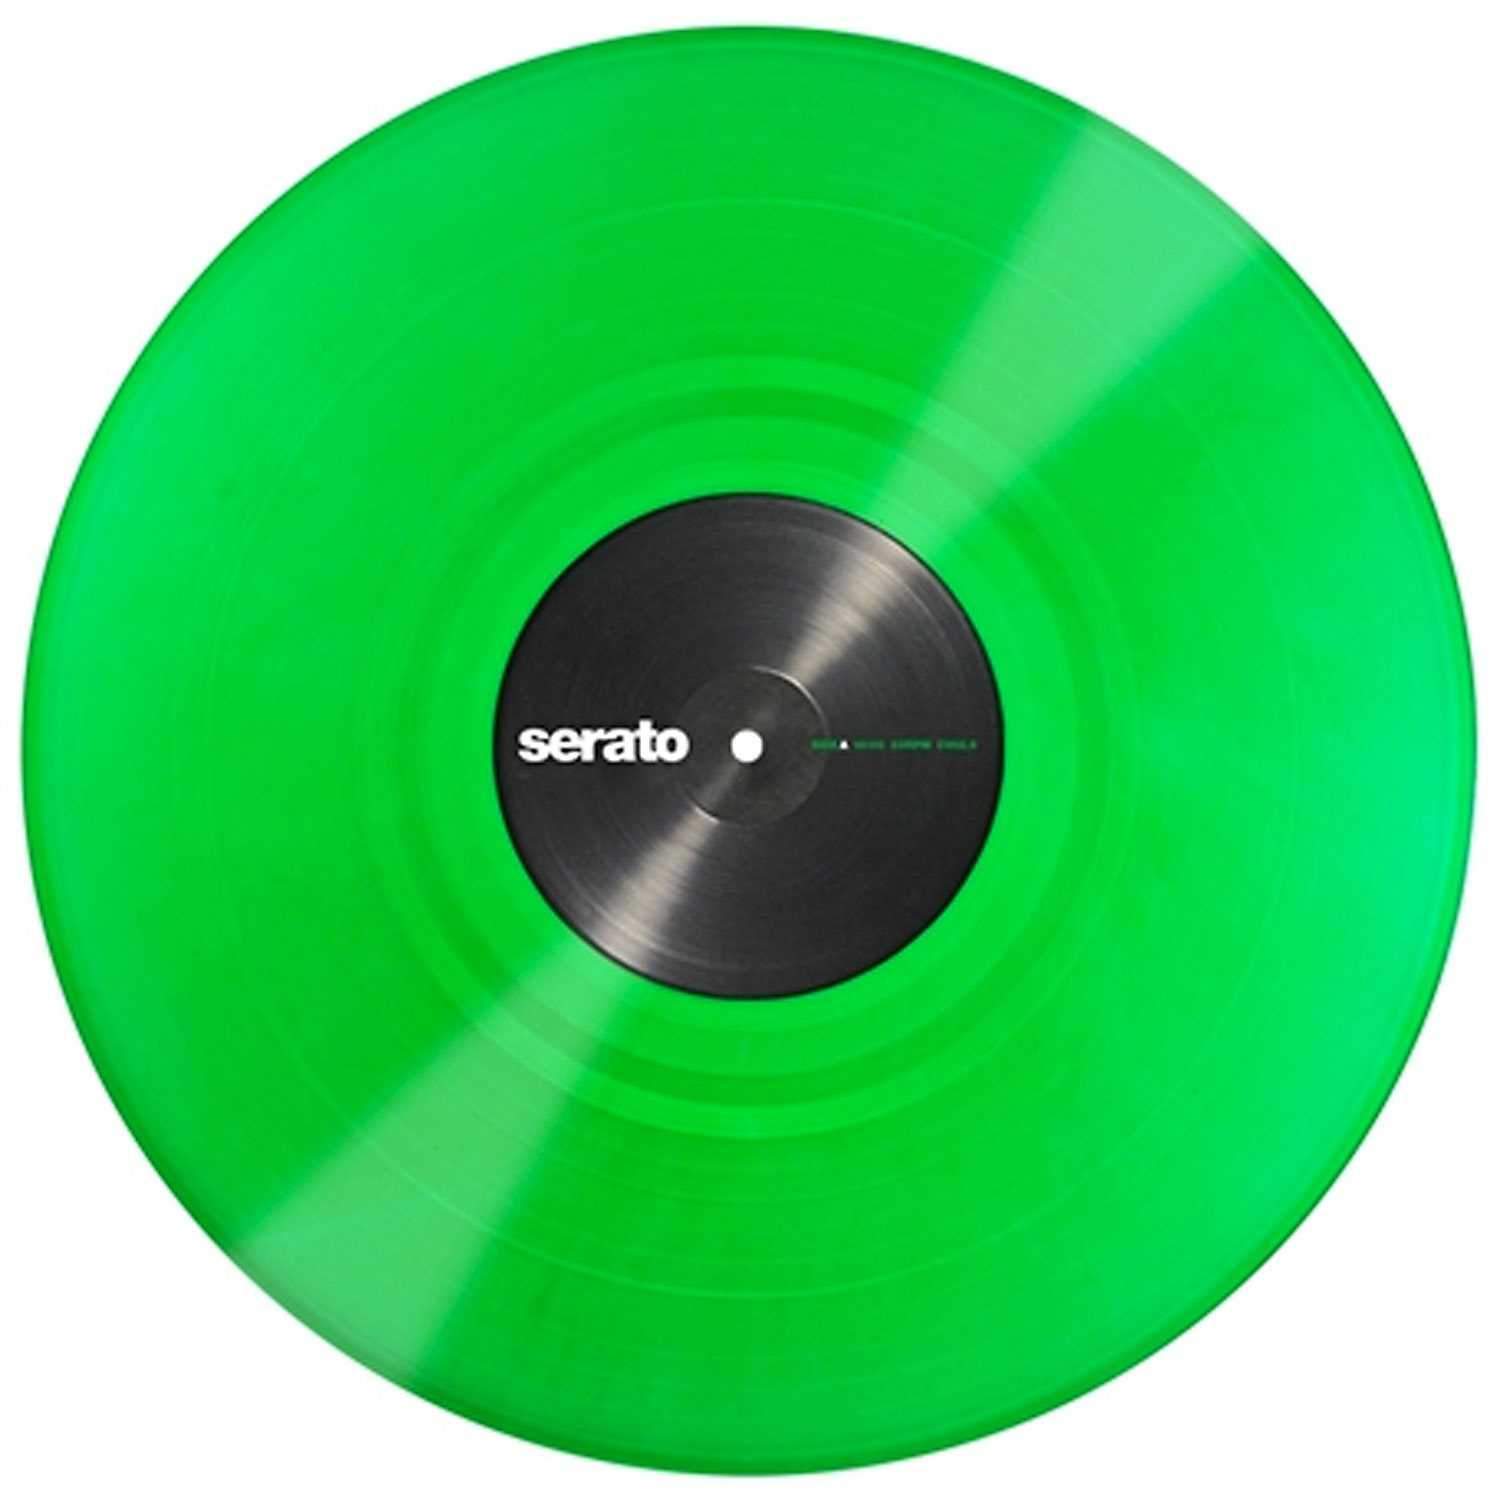 Serato Performance Control Vinyl Green (Pair)